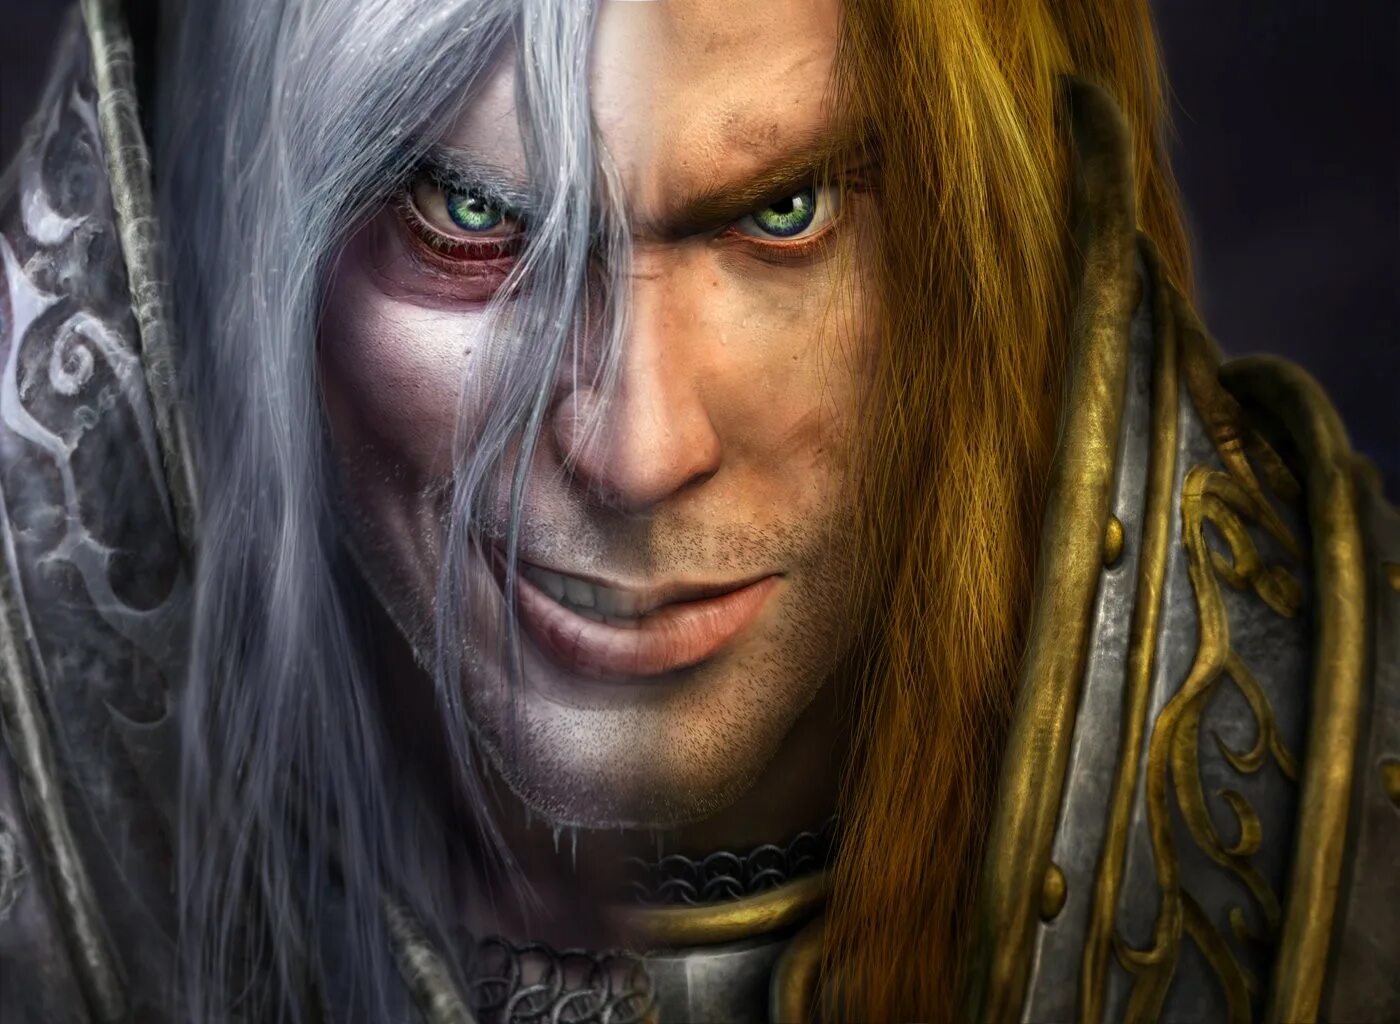 Принц Артас Менетил. Принц Артес варкрафт 3. Артас варкрафт. Артас Менетил (Warcraft). Arthas 2